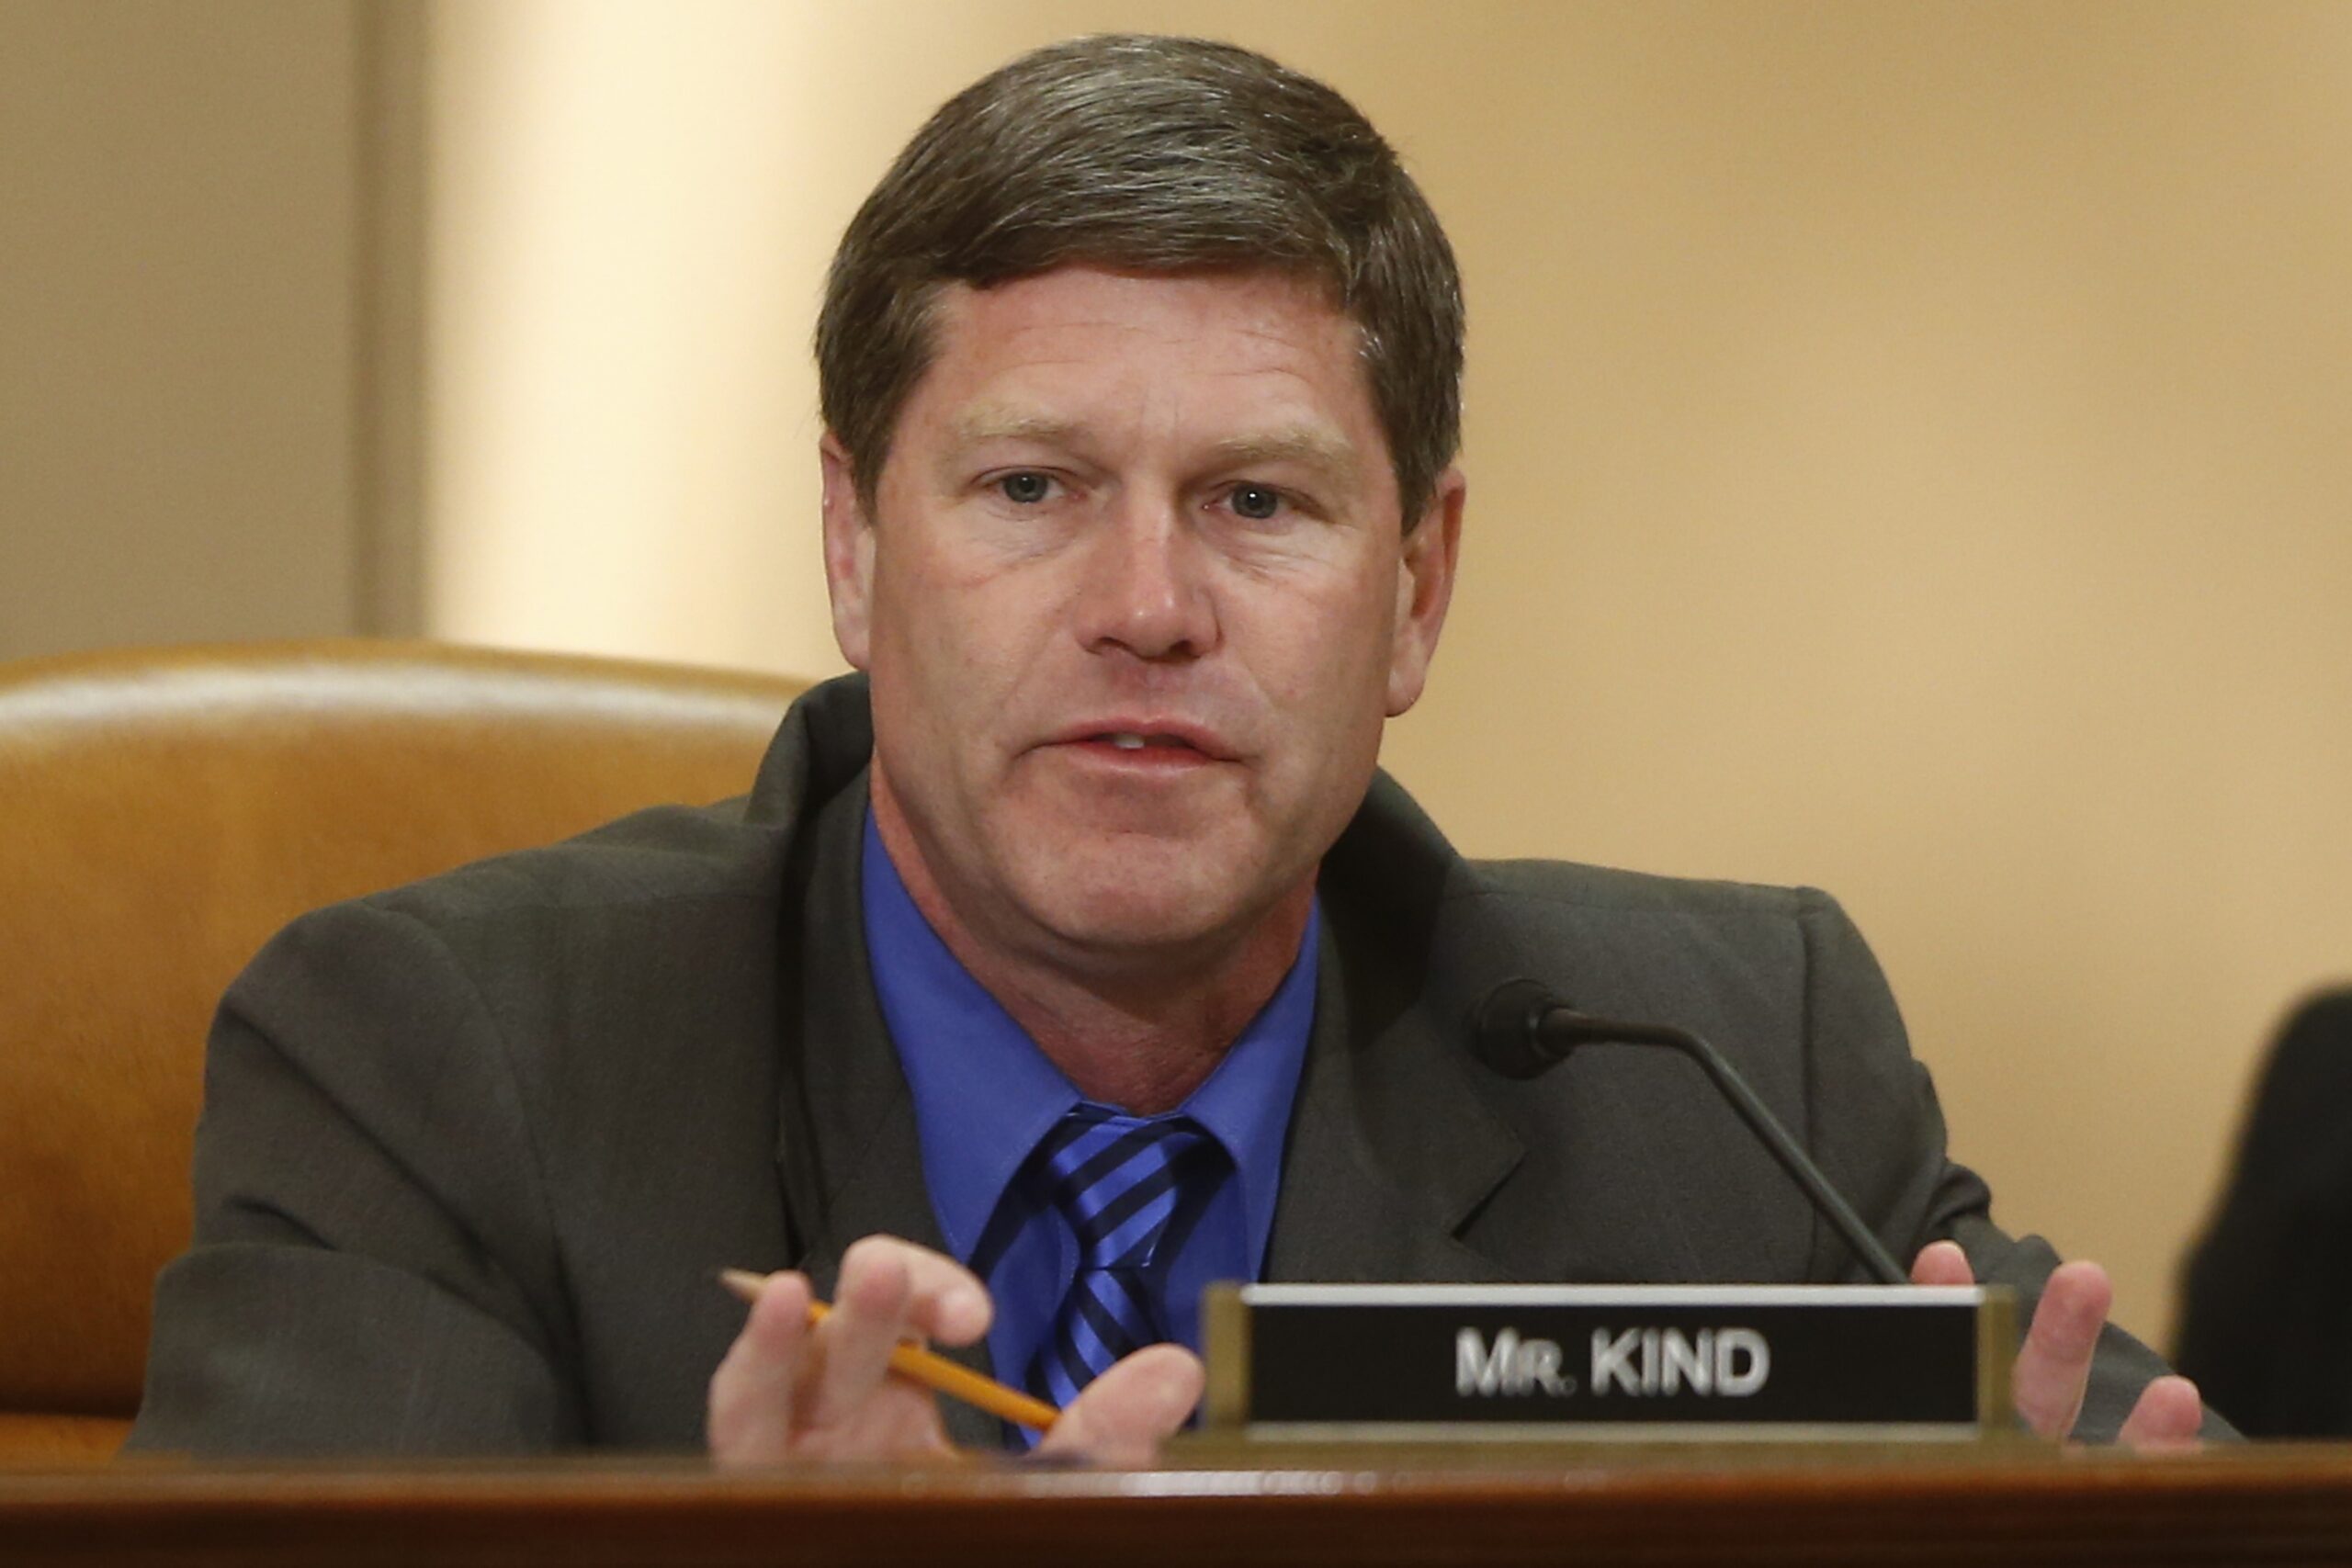 Rep. Ron Kind ‘Taking A Look’ At US Senate Run